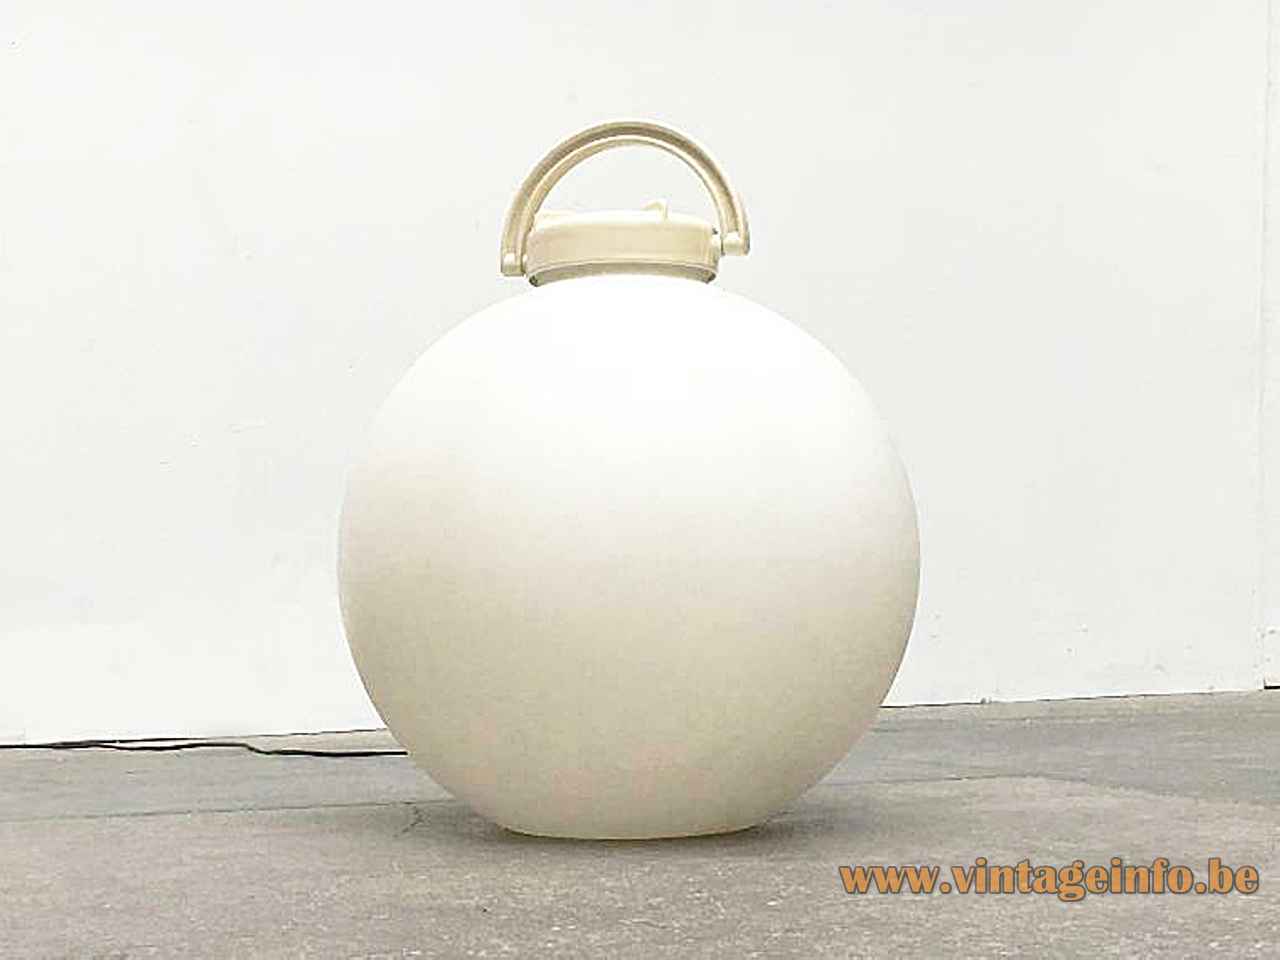 Valenti Tama floor lamp white plastic globe lampshade & handle design: Isao Hosoe 1970s 1980s Italy